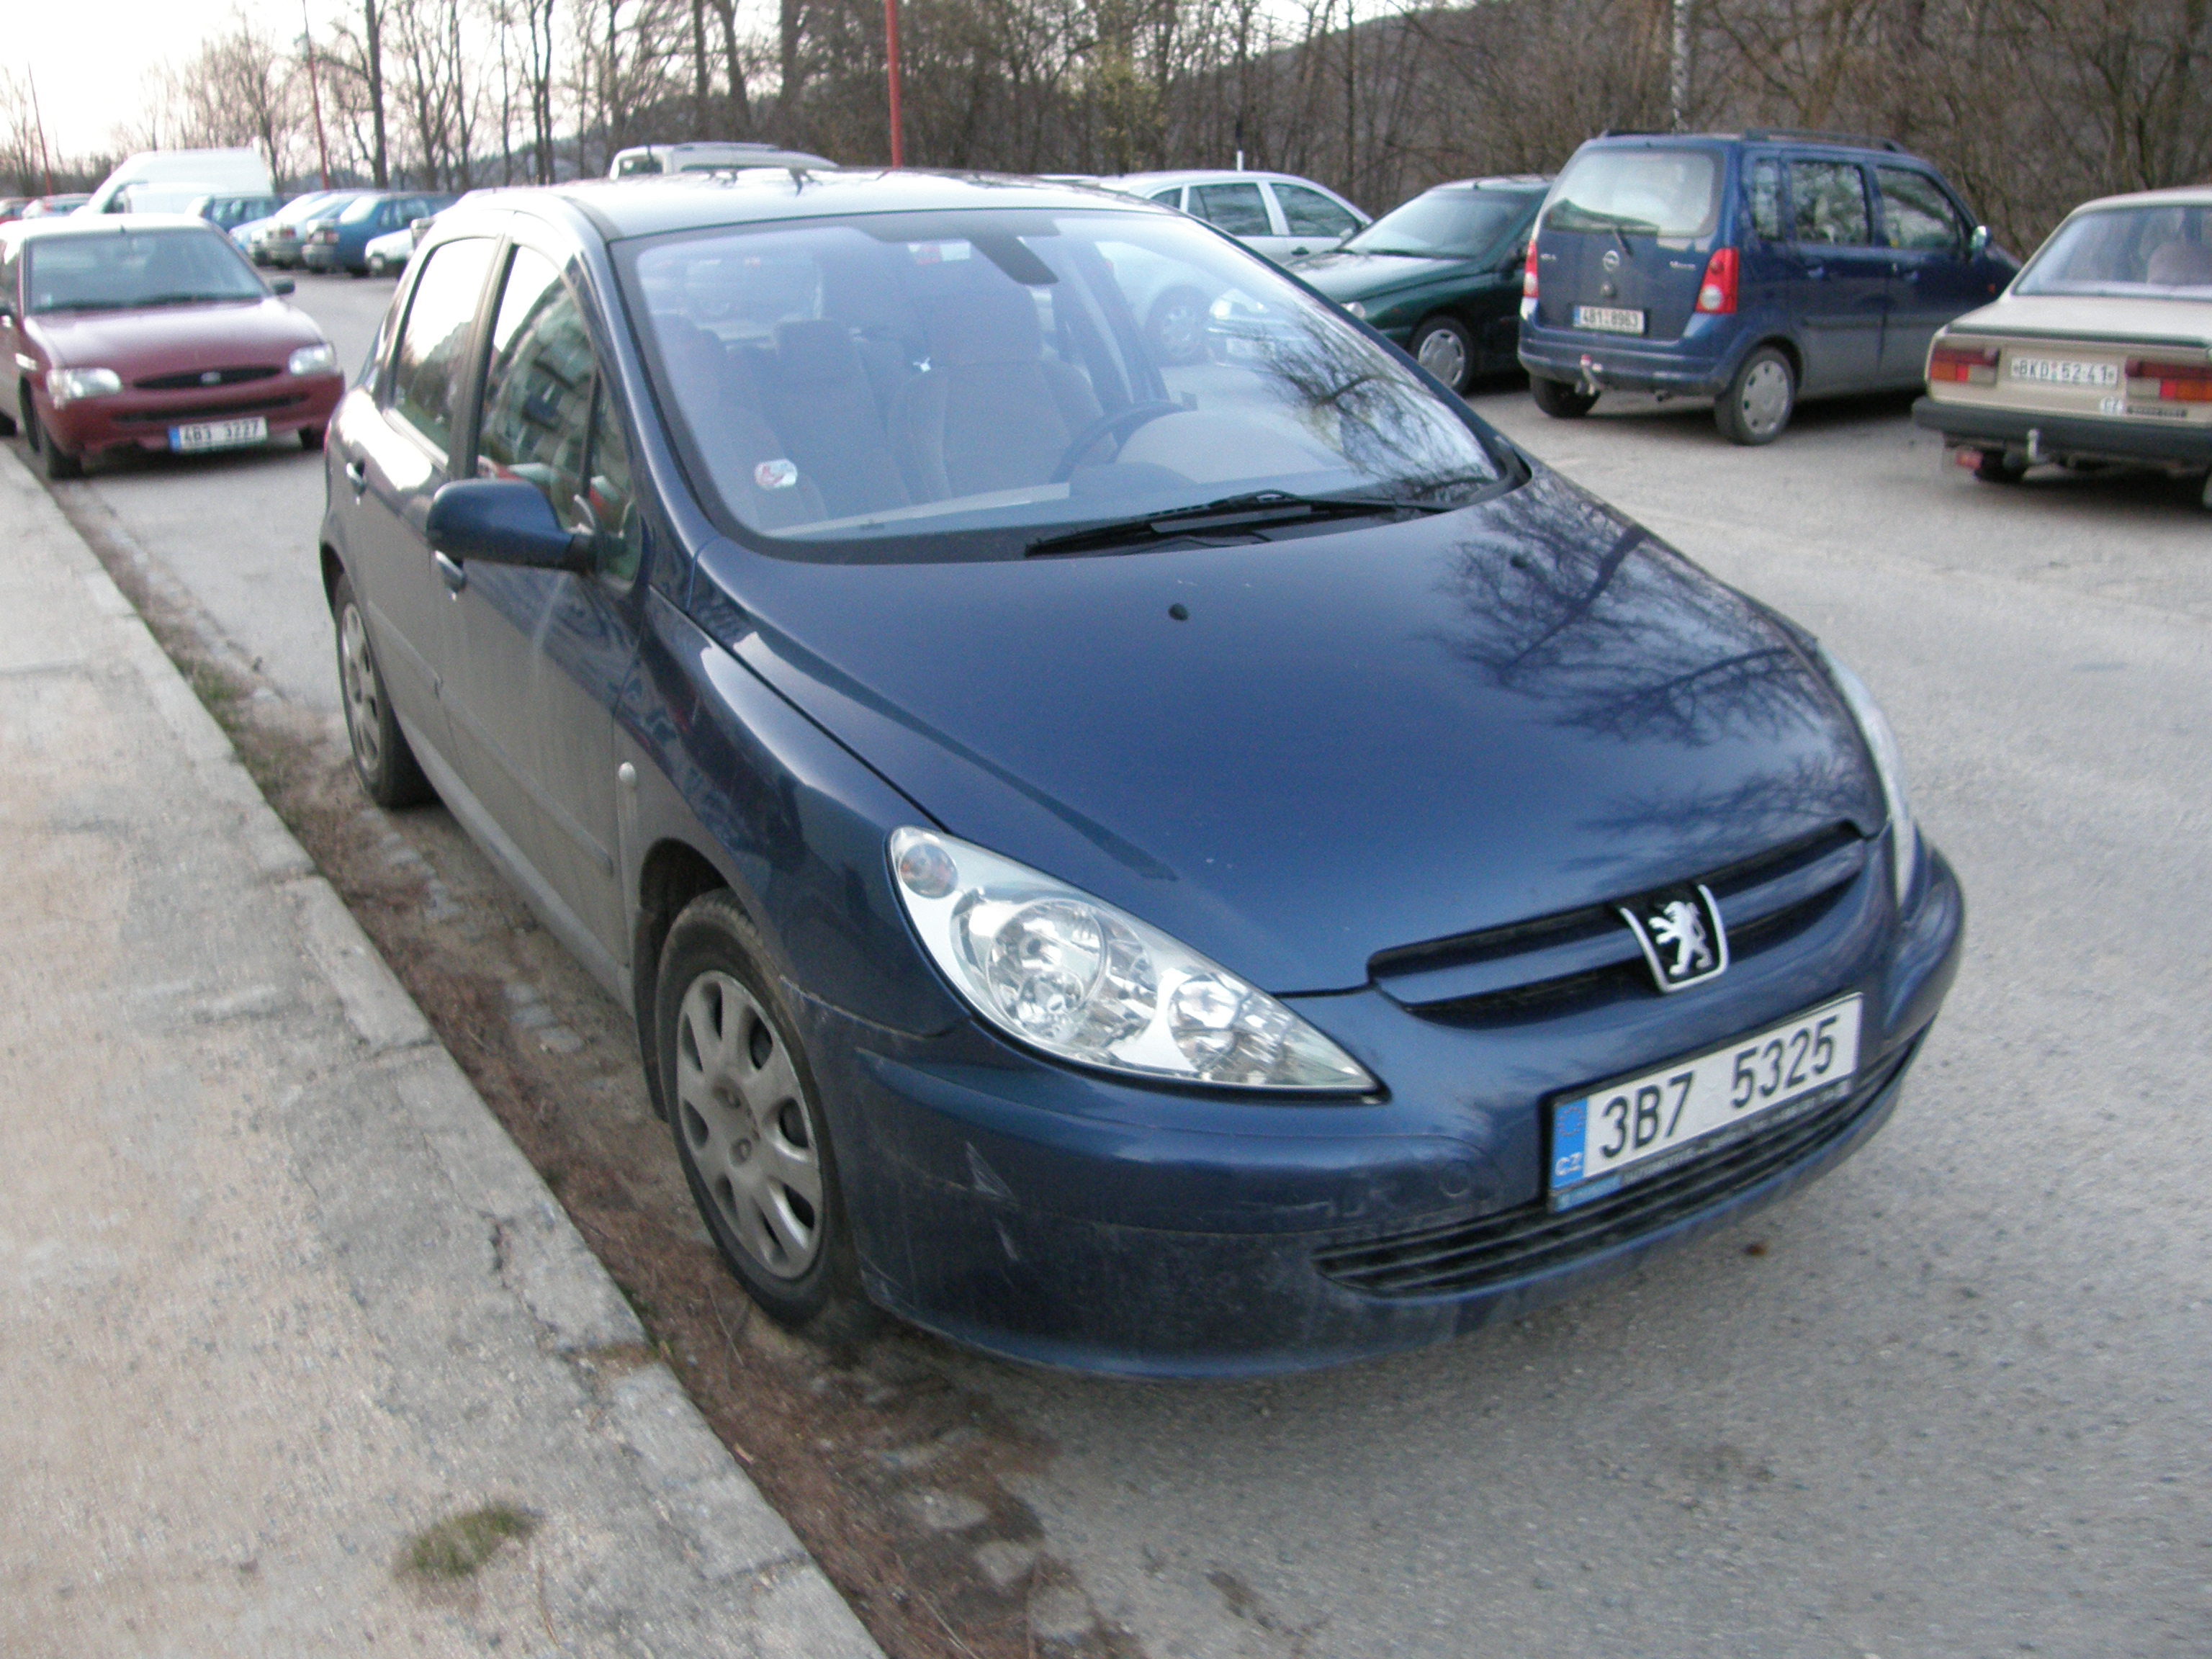 File:Peugeot 307 front 20080320.jpg - Wikipedia